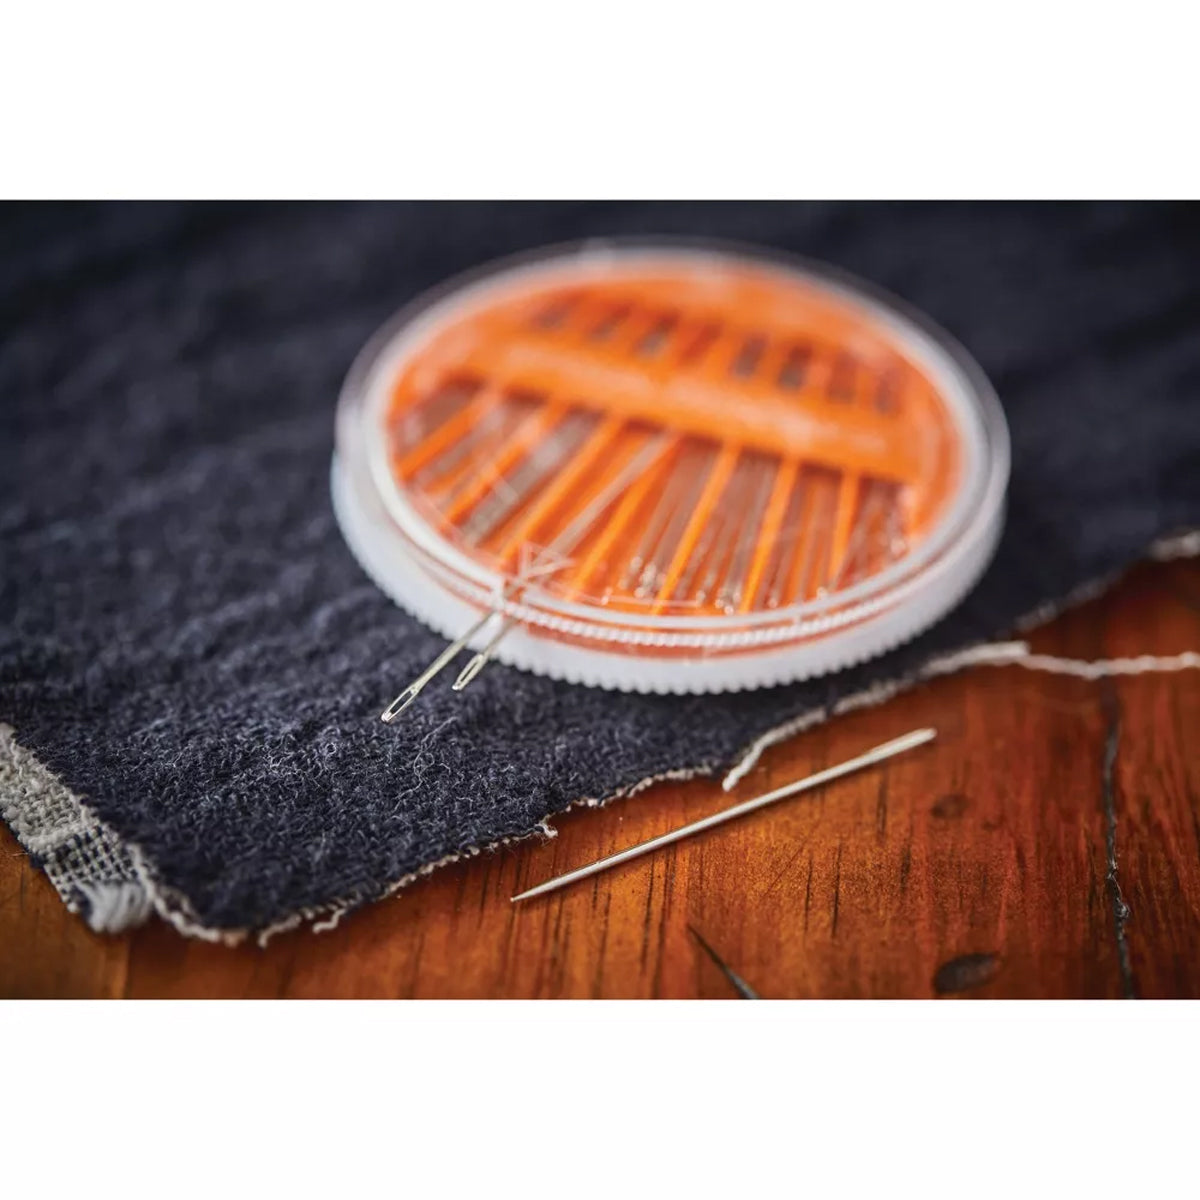 30pc Fiskars Sewing Needles Variety Set – Assorted Sizes 2-7